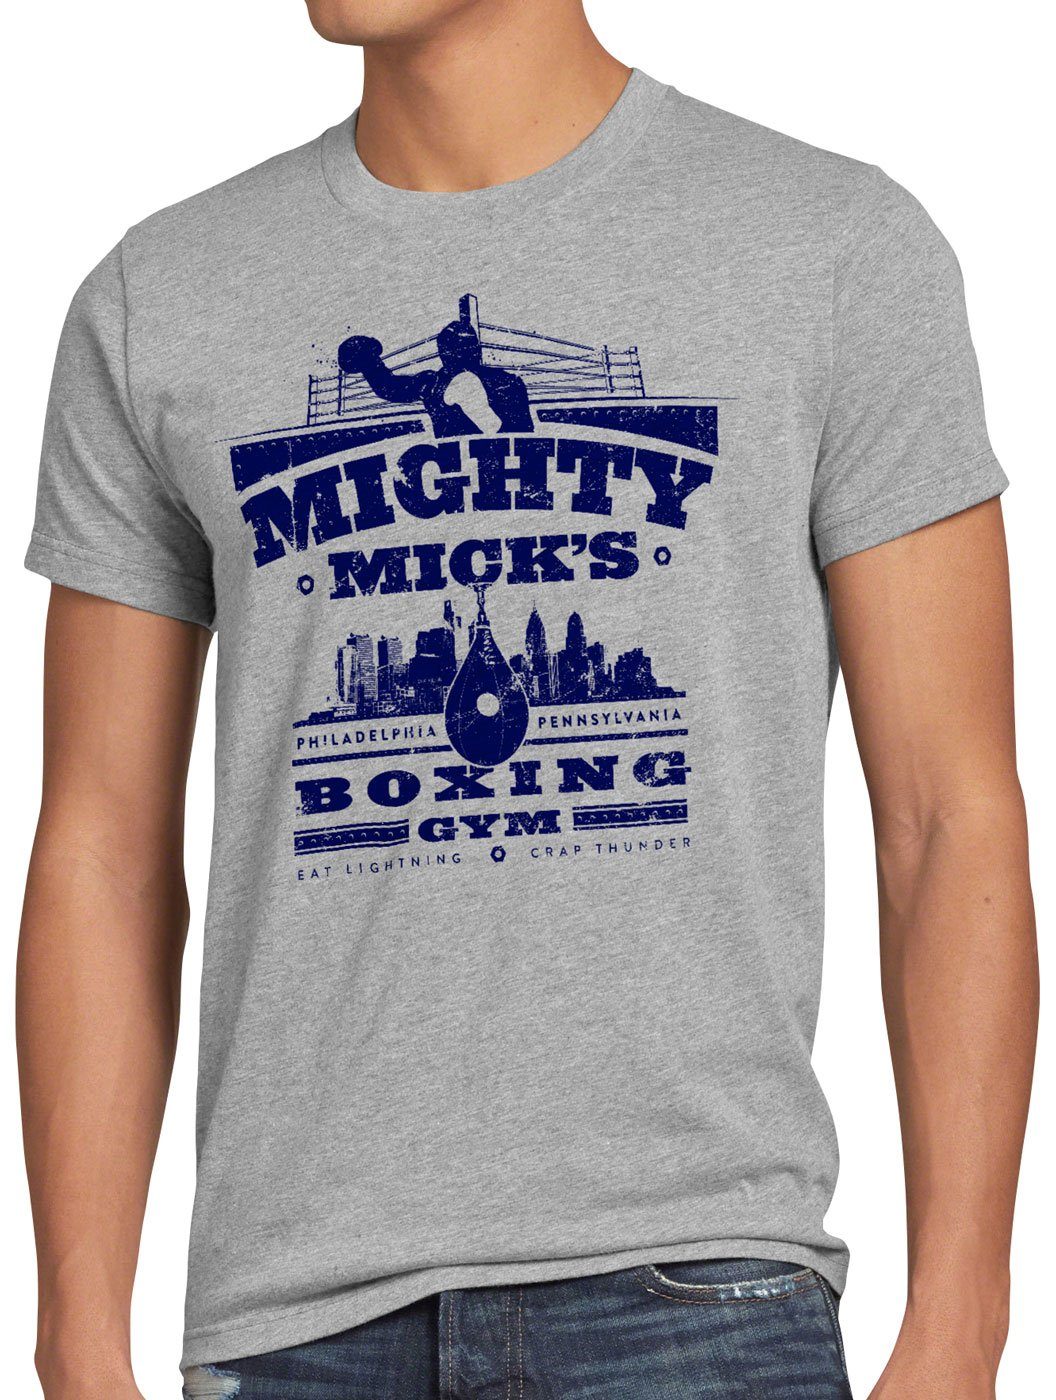 Mick's Print-Shirt Rocky style3 mick gym grau Herren meliert T-Shirt mighty balboa Boxing